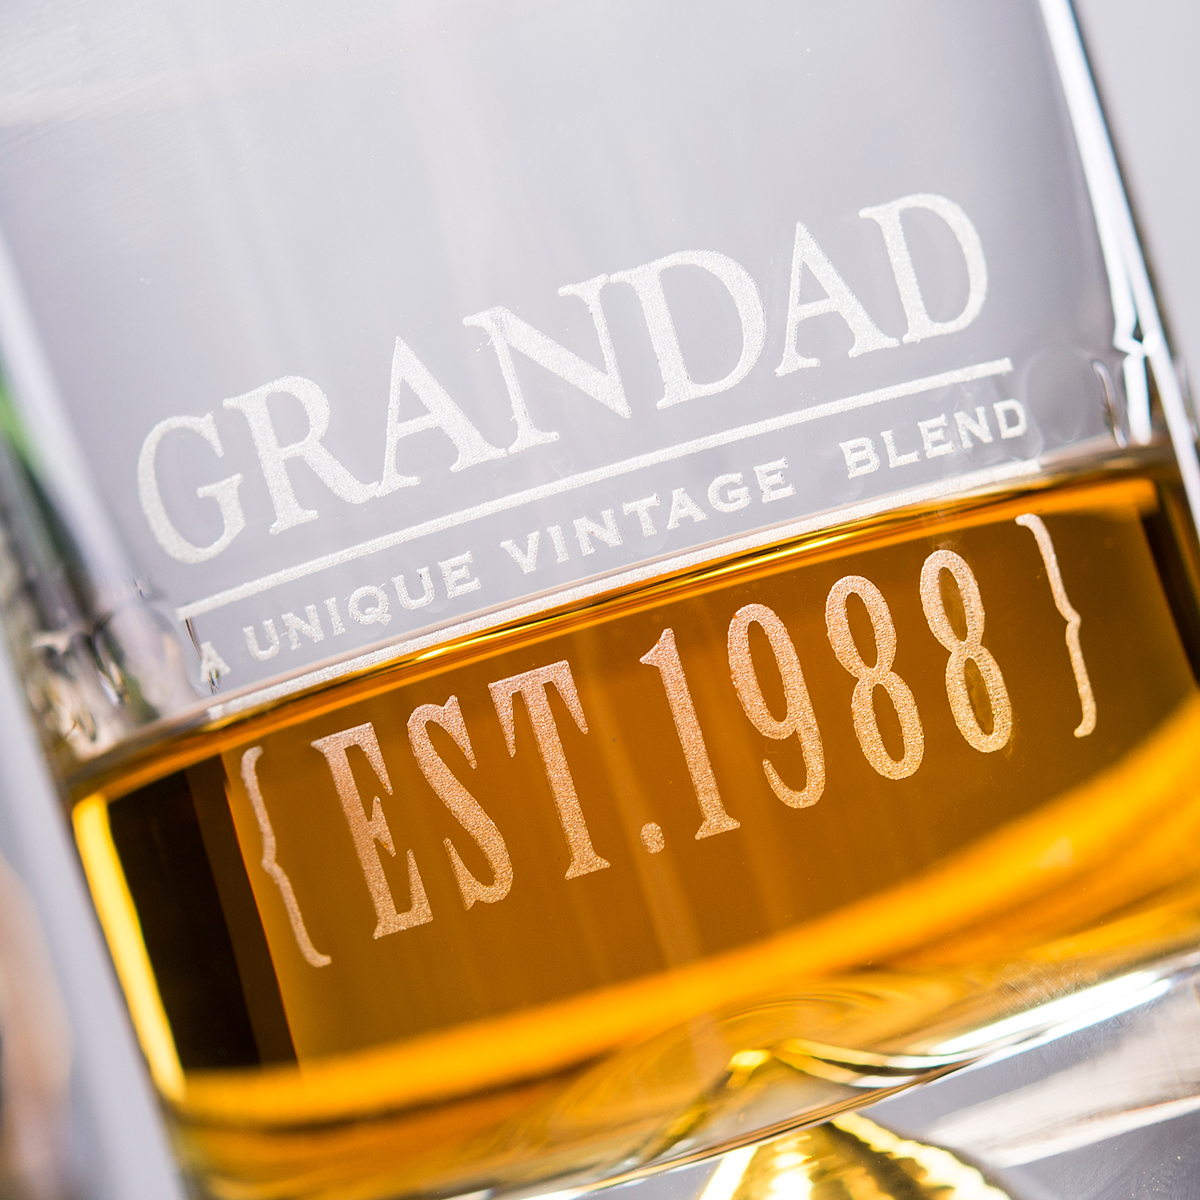 Personalised Whisky Tumbler & Glenfiddich Miniature - Vintage Blend